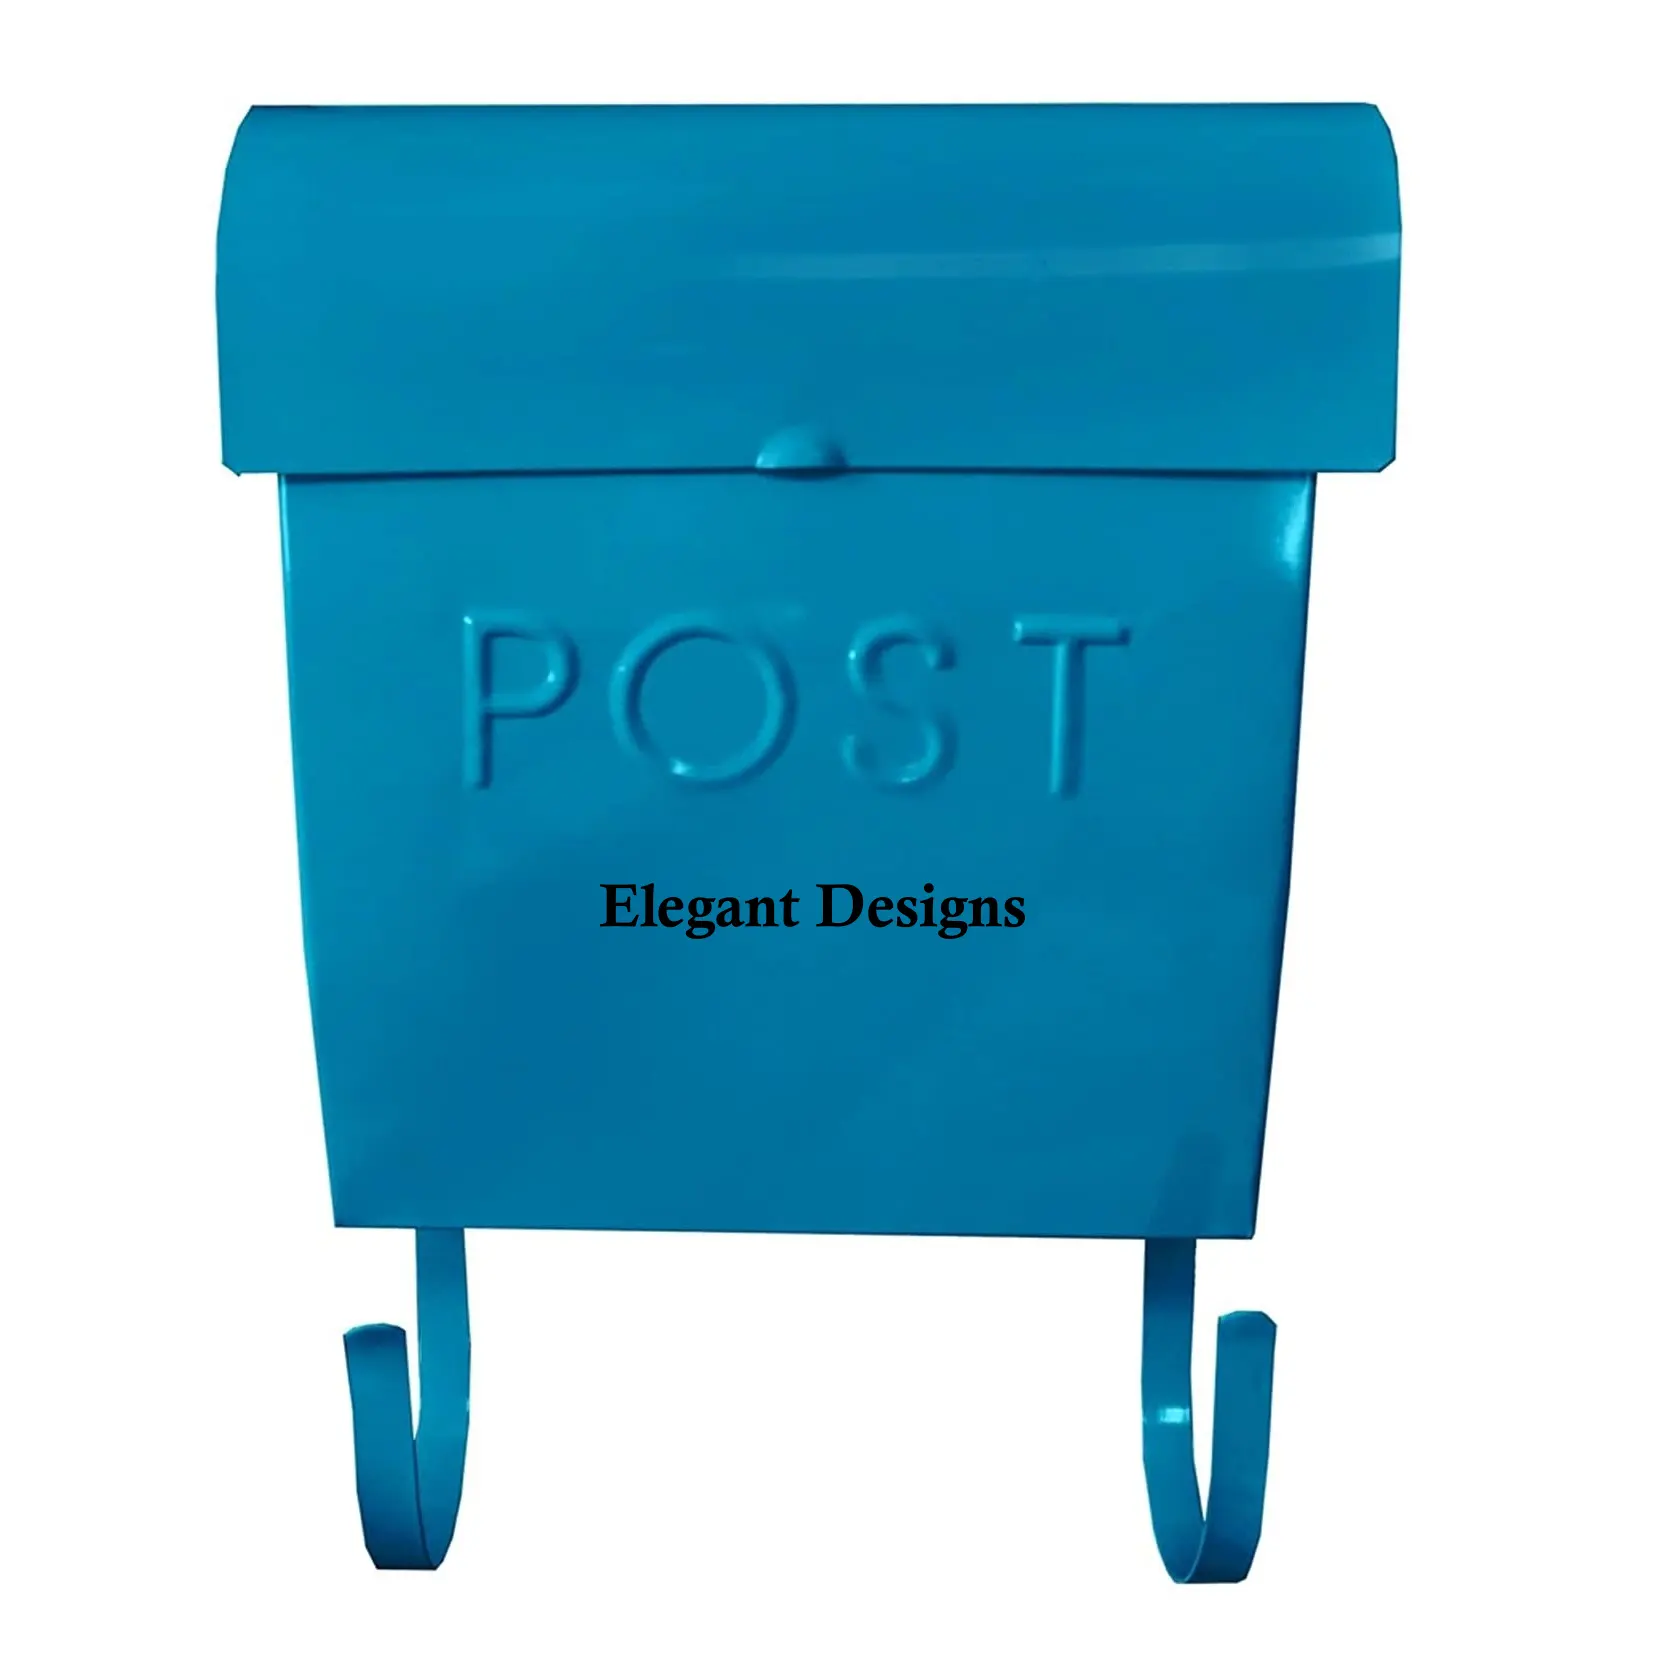 Mavi toz kaplı galvanizli posta kutusu kare şekli el yapımı posta kutusu ucuz hint şık fantezi duvara monte posta kutusu